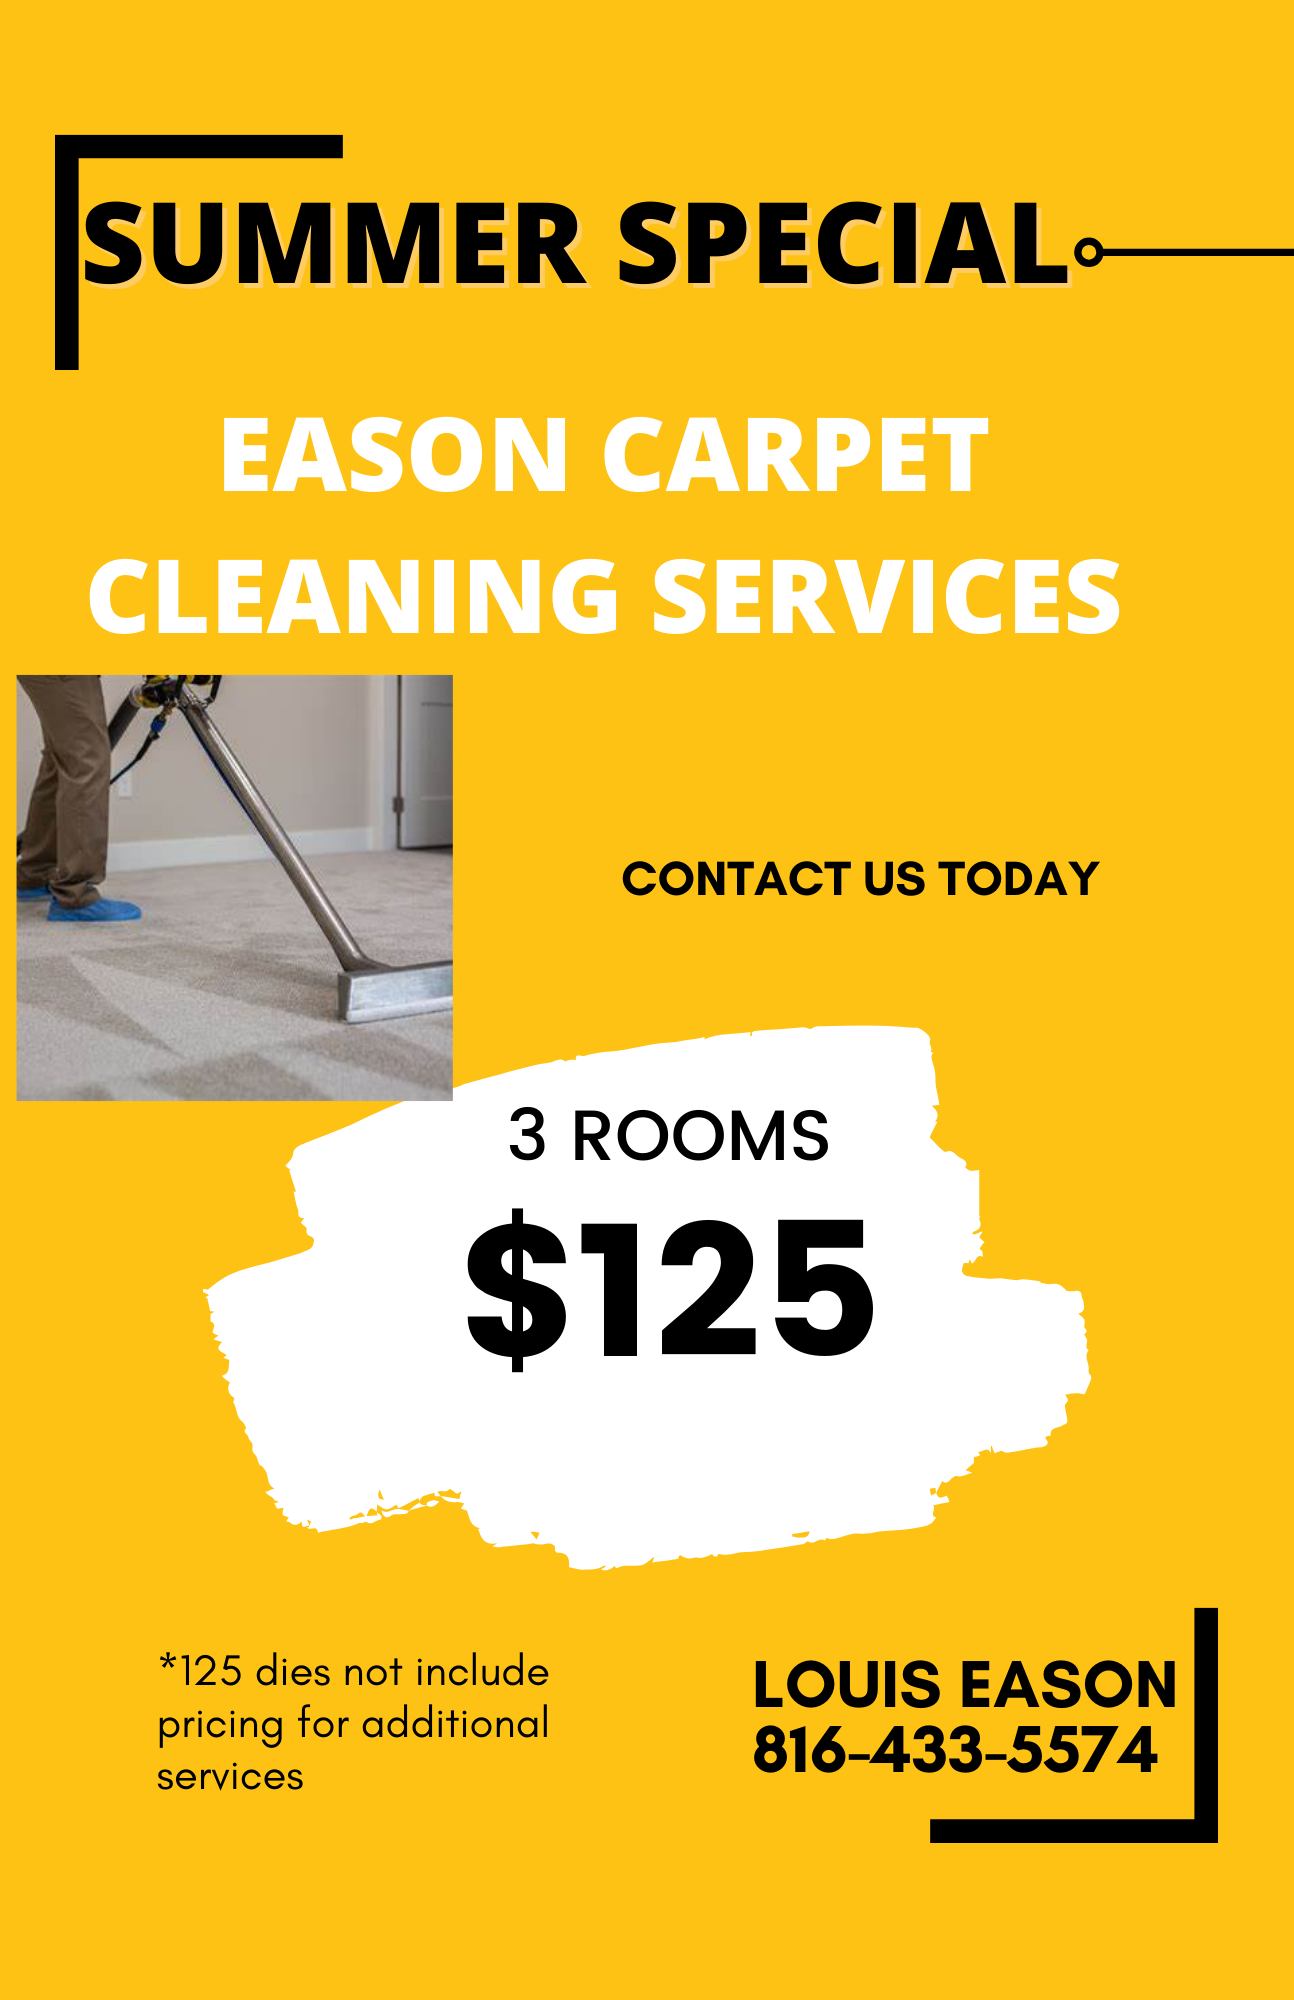 Eason Carpet Cleaning